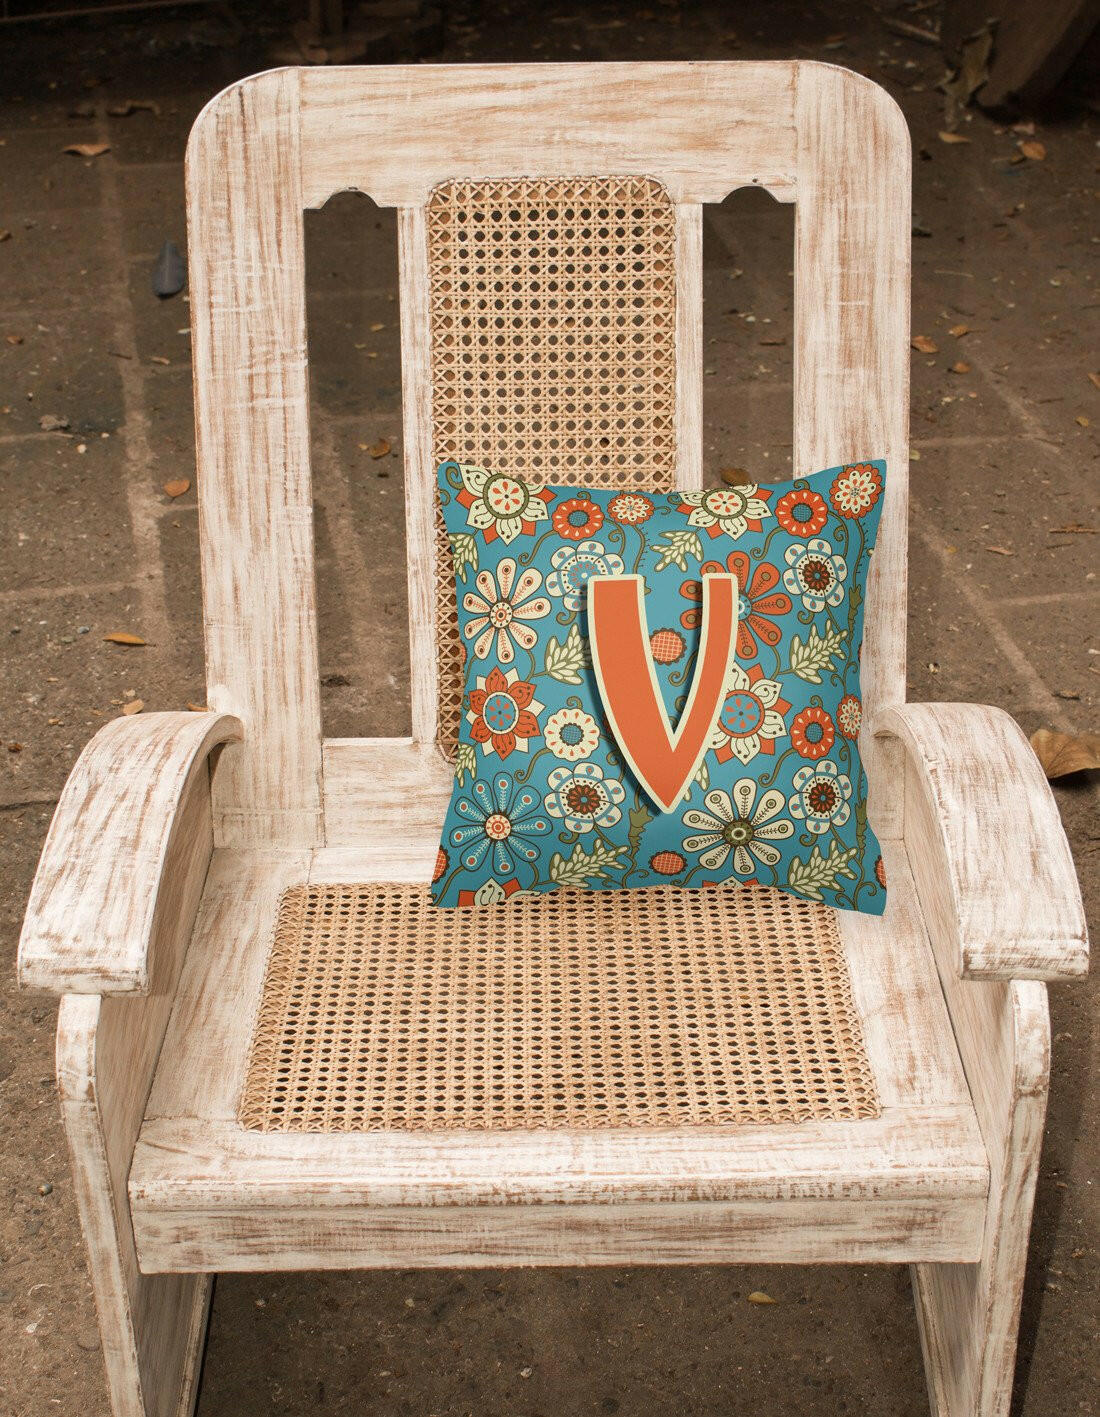 Letter V Flowers Retro Blue Canvas Fabric Decorative Pillow CJ2012-VPW1414 by Caroline's Treasures